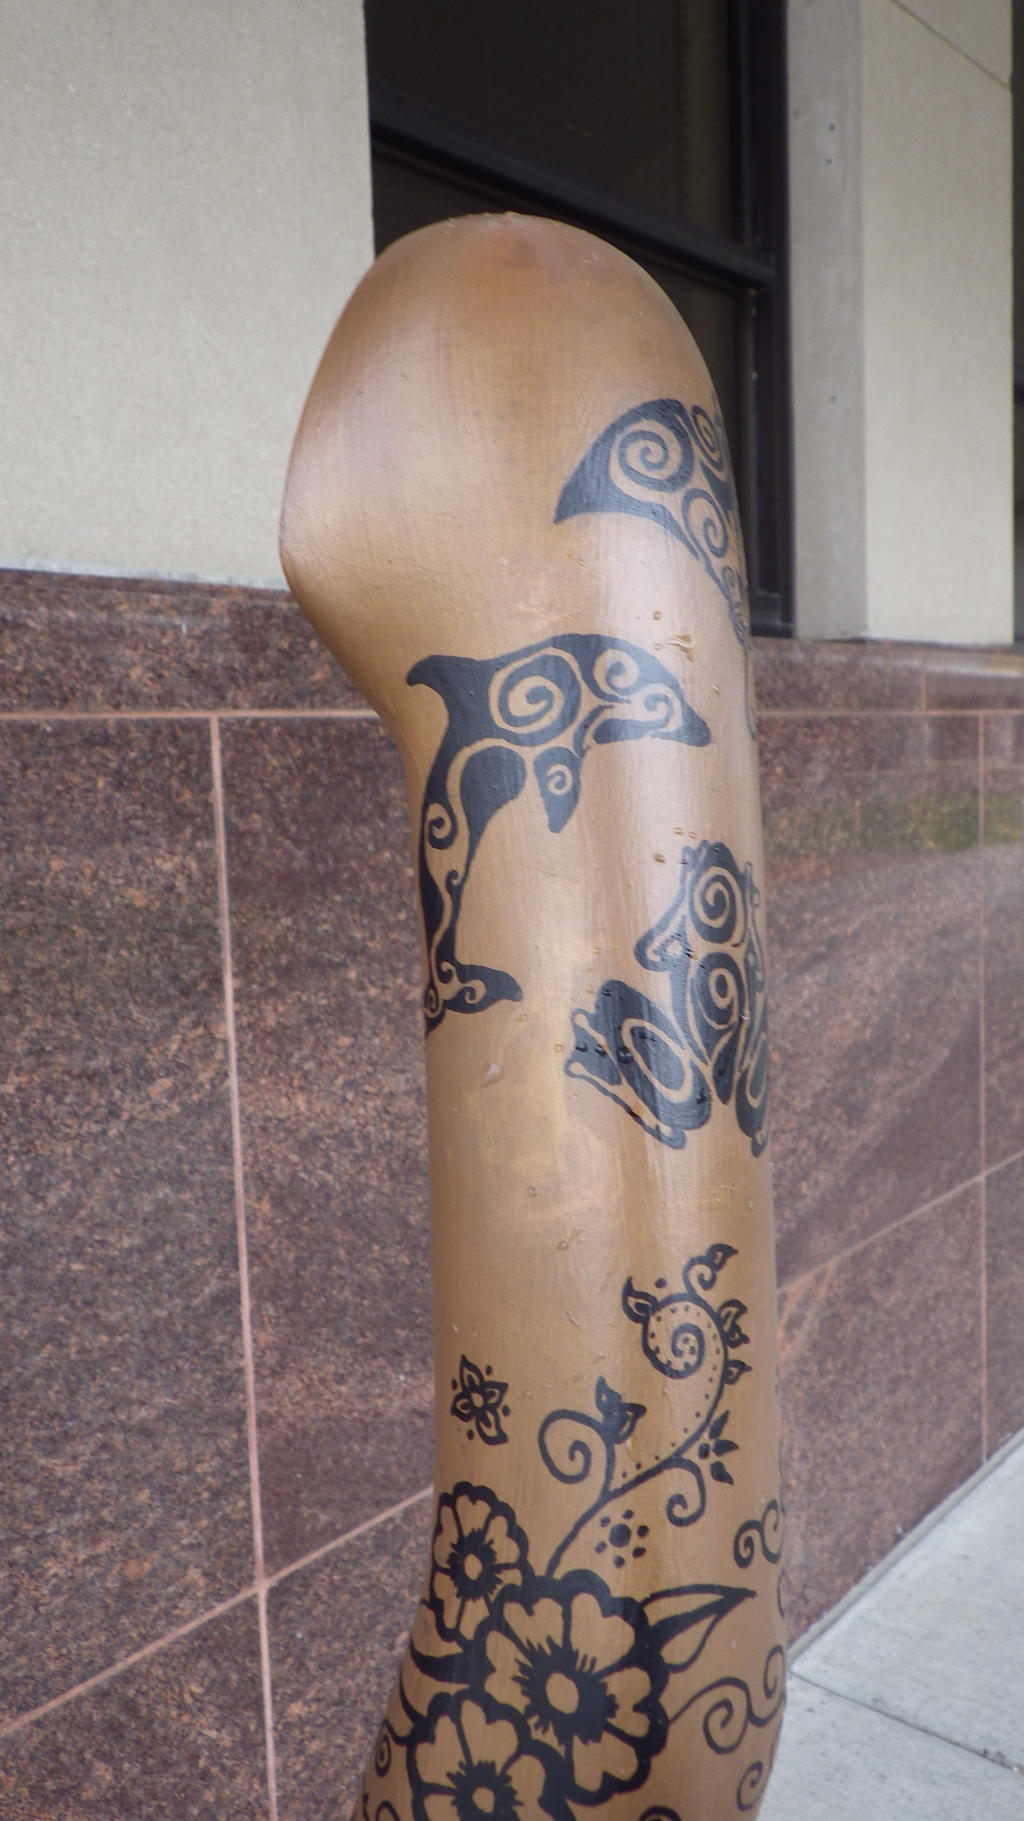 Upper Arm Henna and Polynesian Tribal Tattoos by Rockish21 on DeviantArt